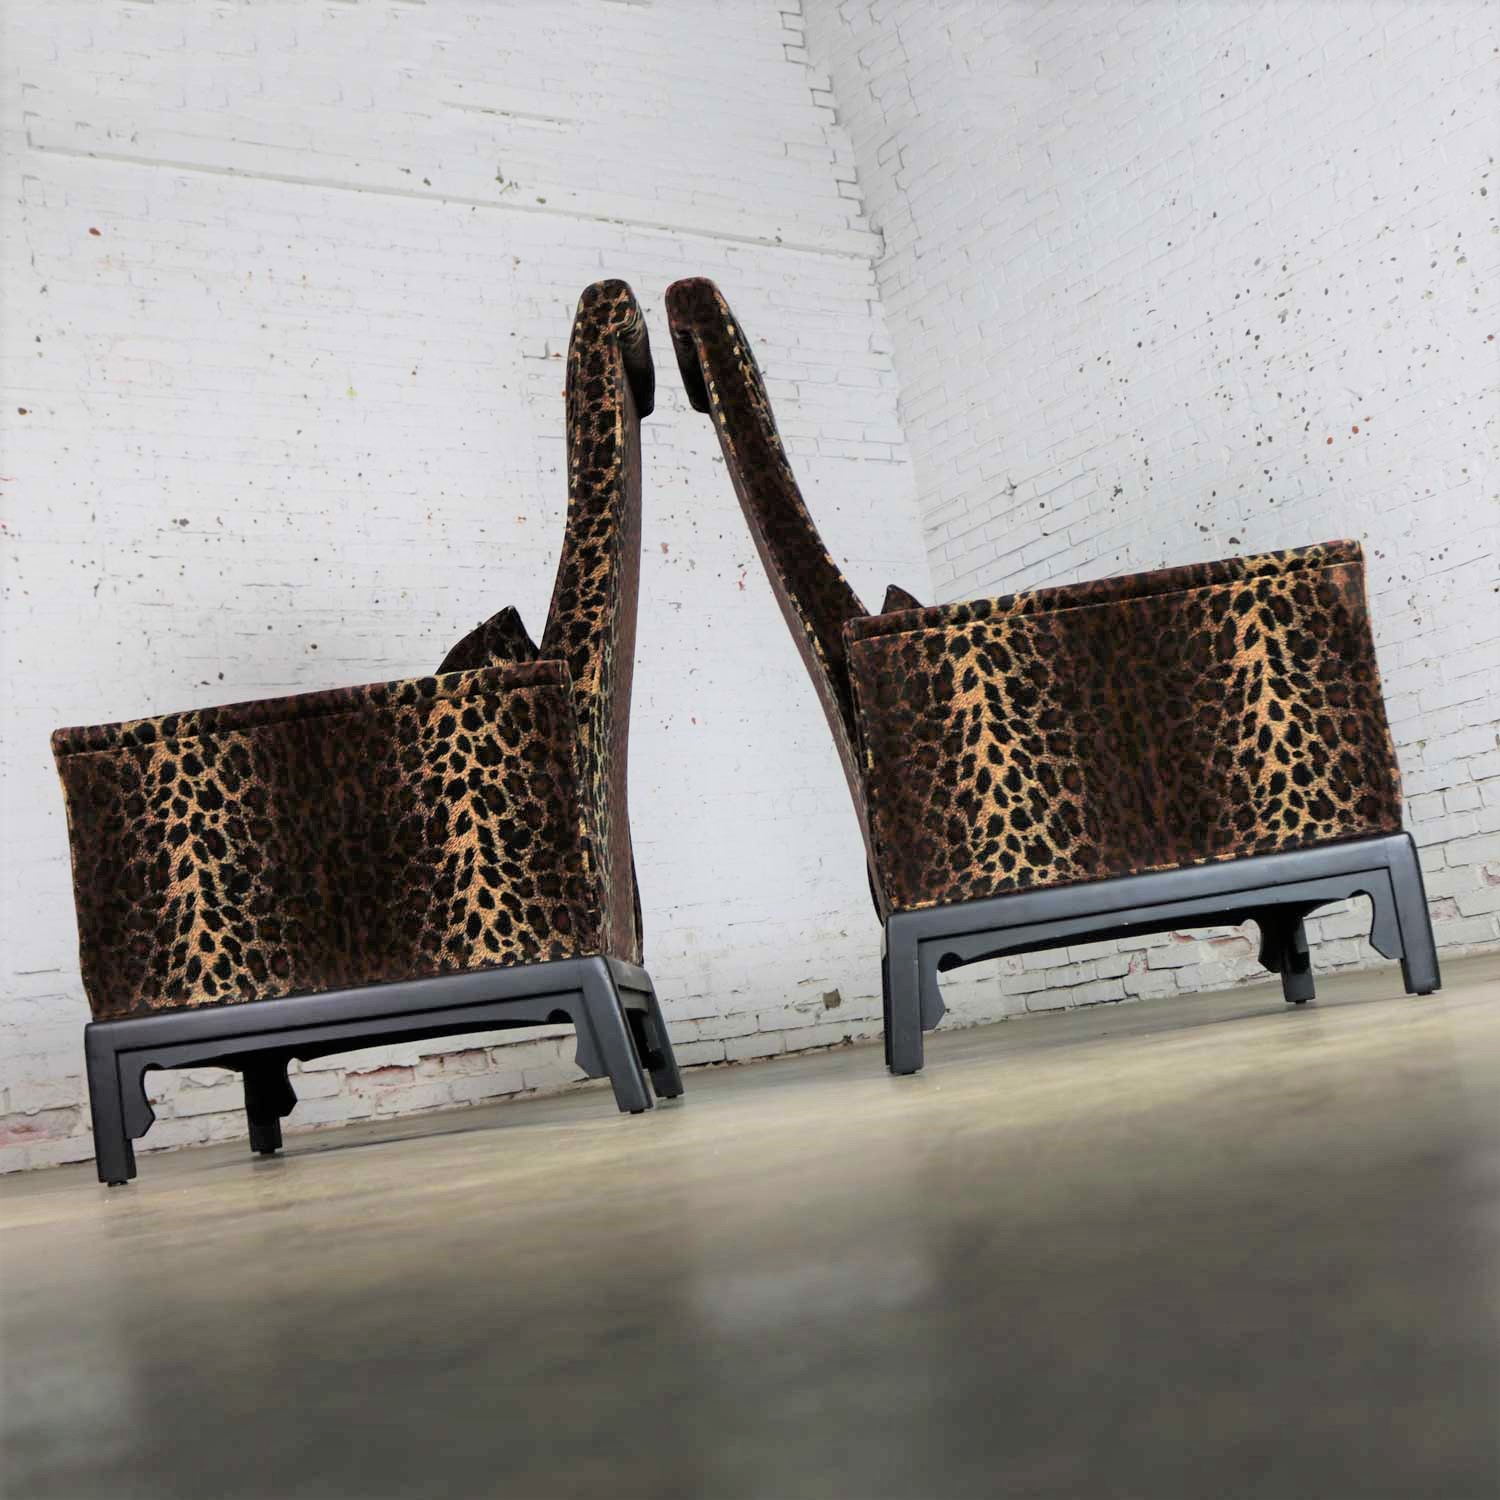 Pair Hollywood Regency High Back Chairs in Velvet Animal Print & Style of James Mont